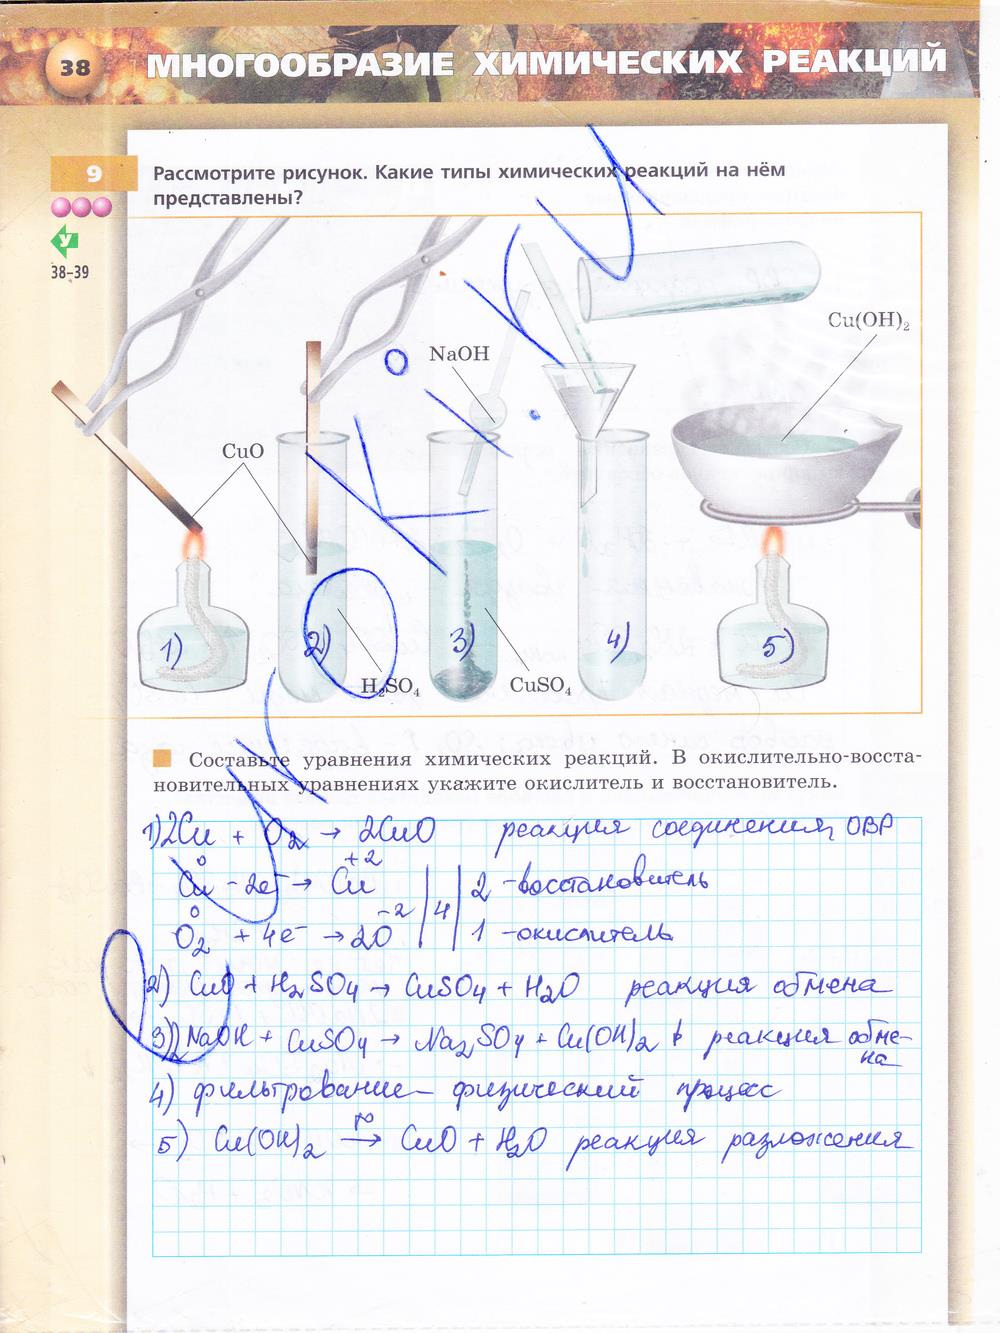 гдз 9 класс тетрадь-тренажёр страница 38 химия Гара